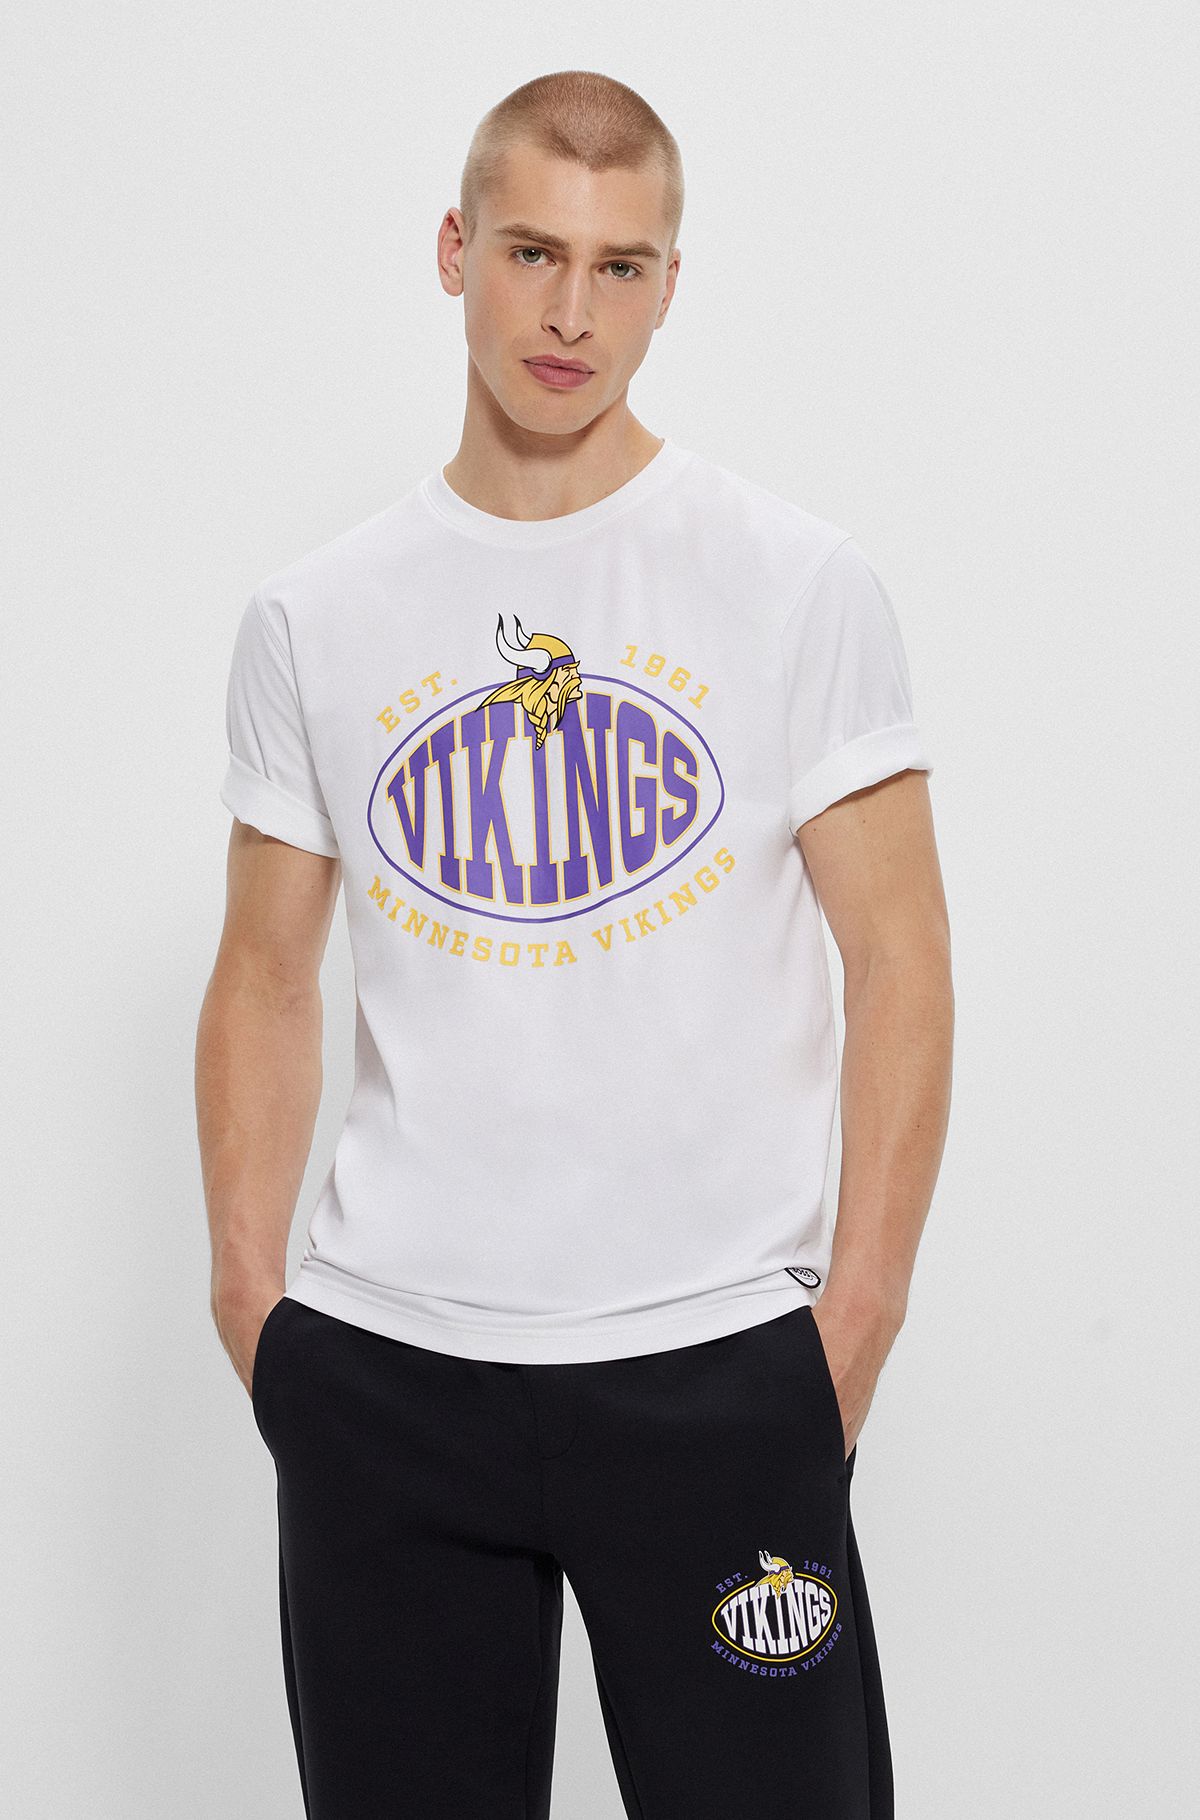  T-shirt en coton stretch BOSS x NFL avec logo du partenariat, Vikings